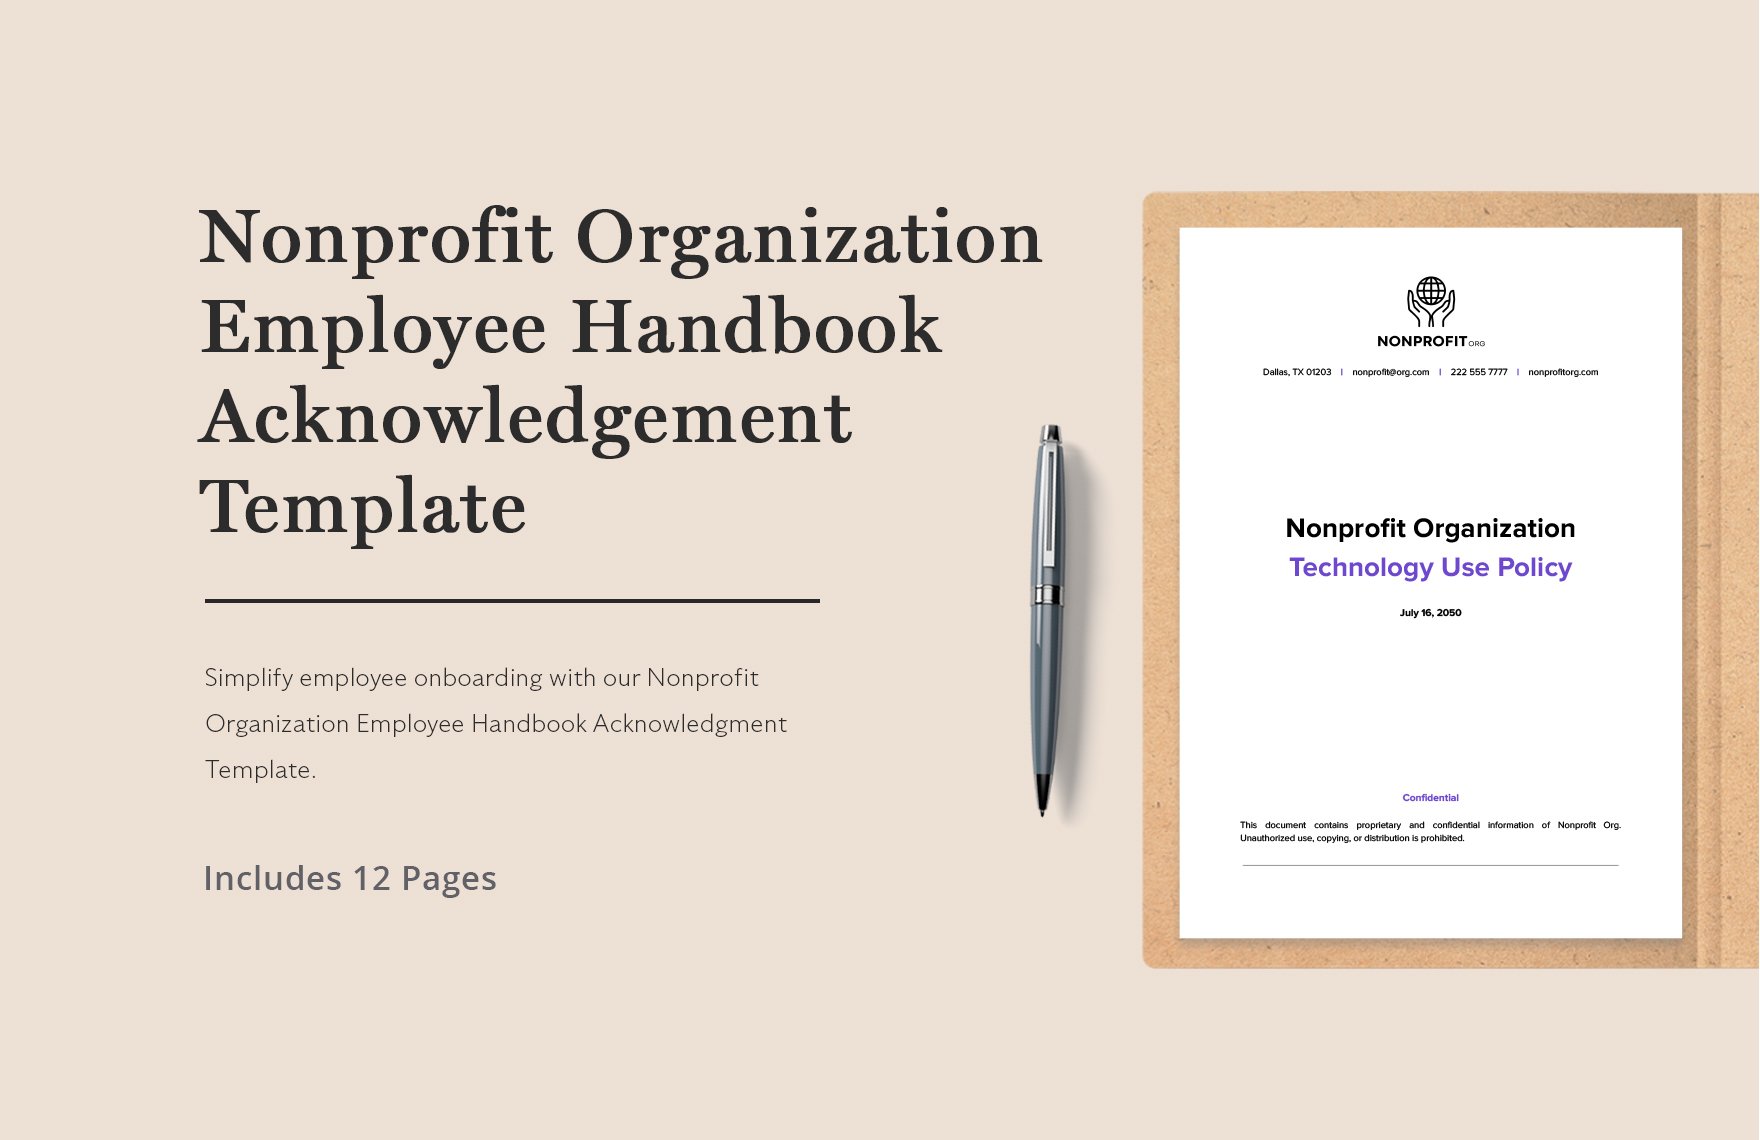 Nonprofit Organization Employee Handbook Acknowledgement Template in Word, Google Docs, PDF